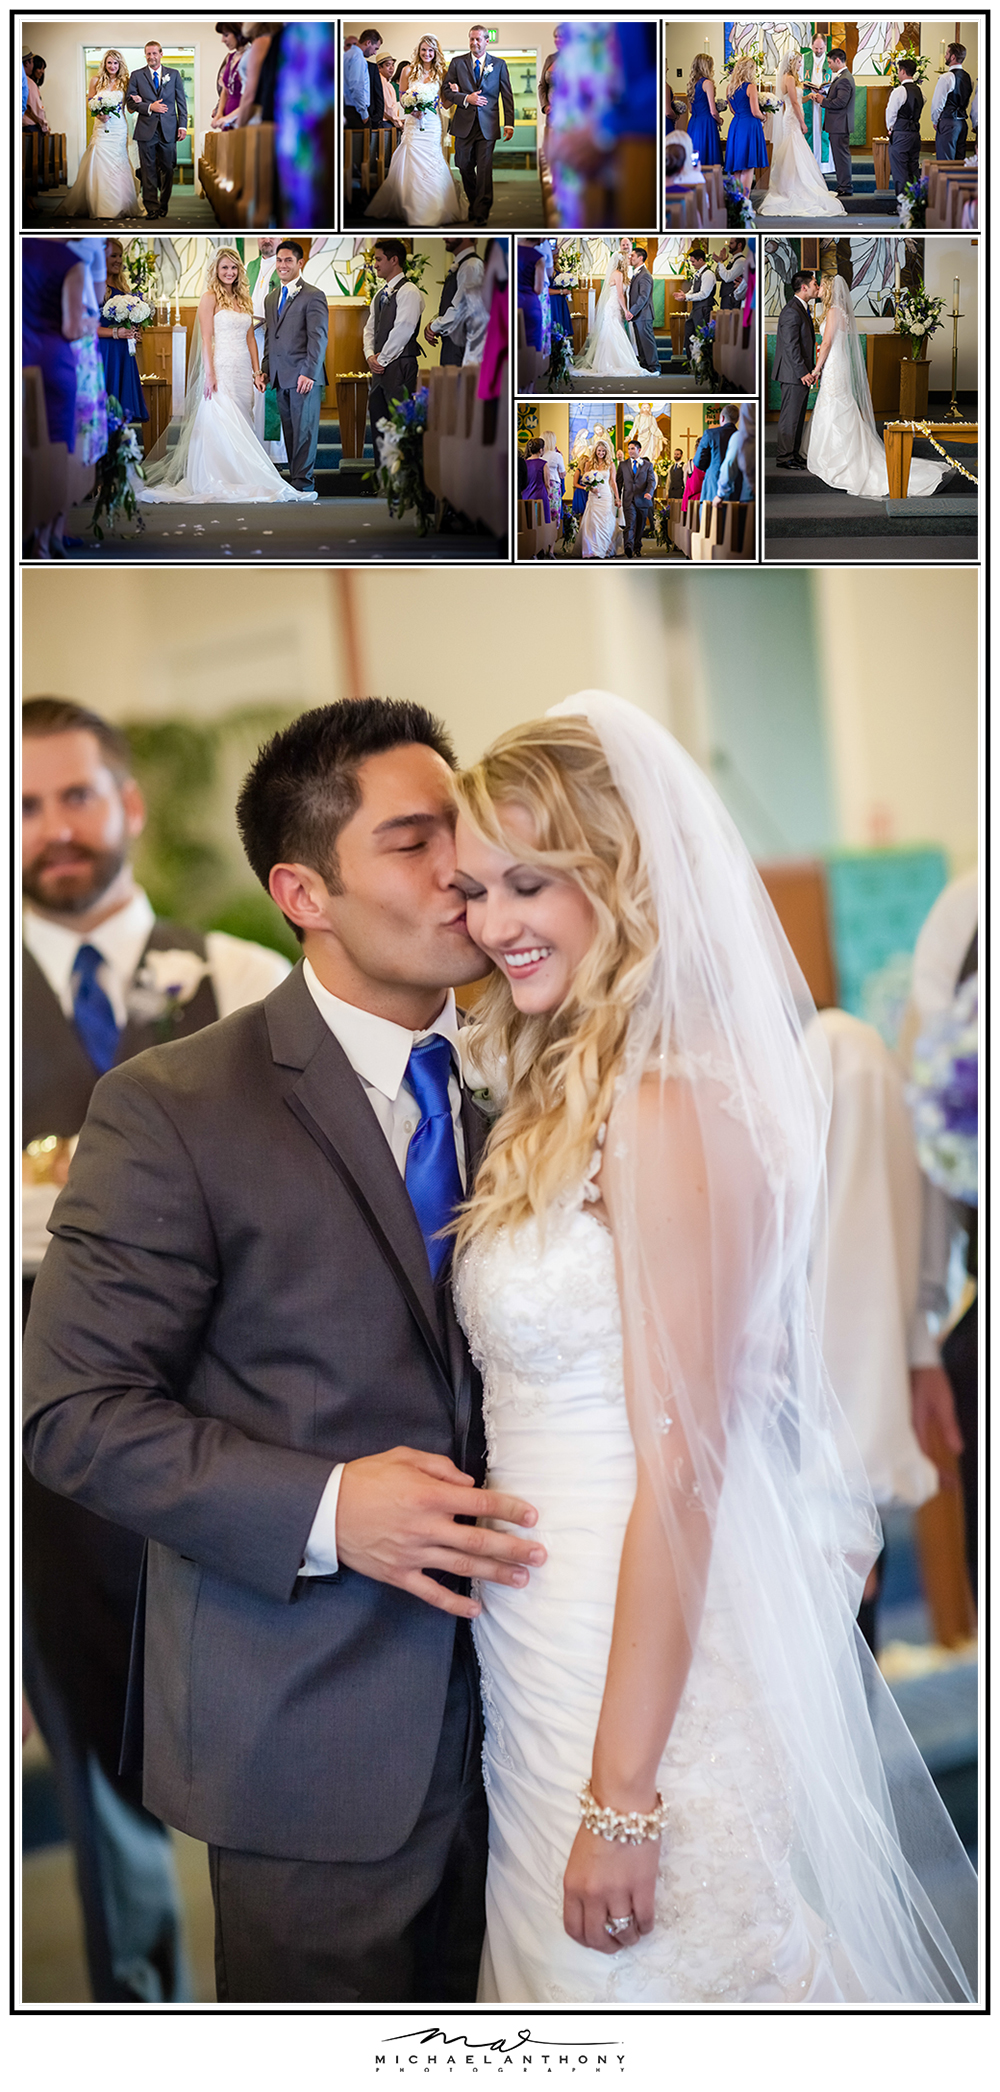 Breanna and Derek | Meadowlark Golf Course Wedding Photos | Los Angeles Wedding Photographers, Michael Anthony Photography Blog: Los Angeles Wedding Photography